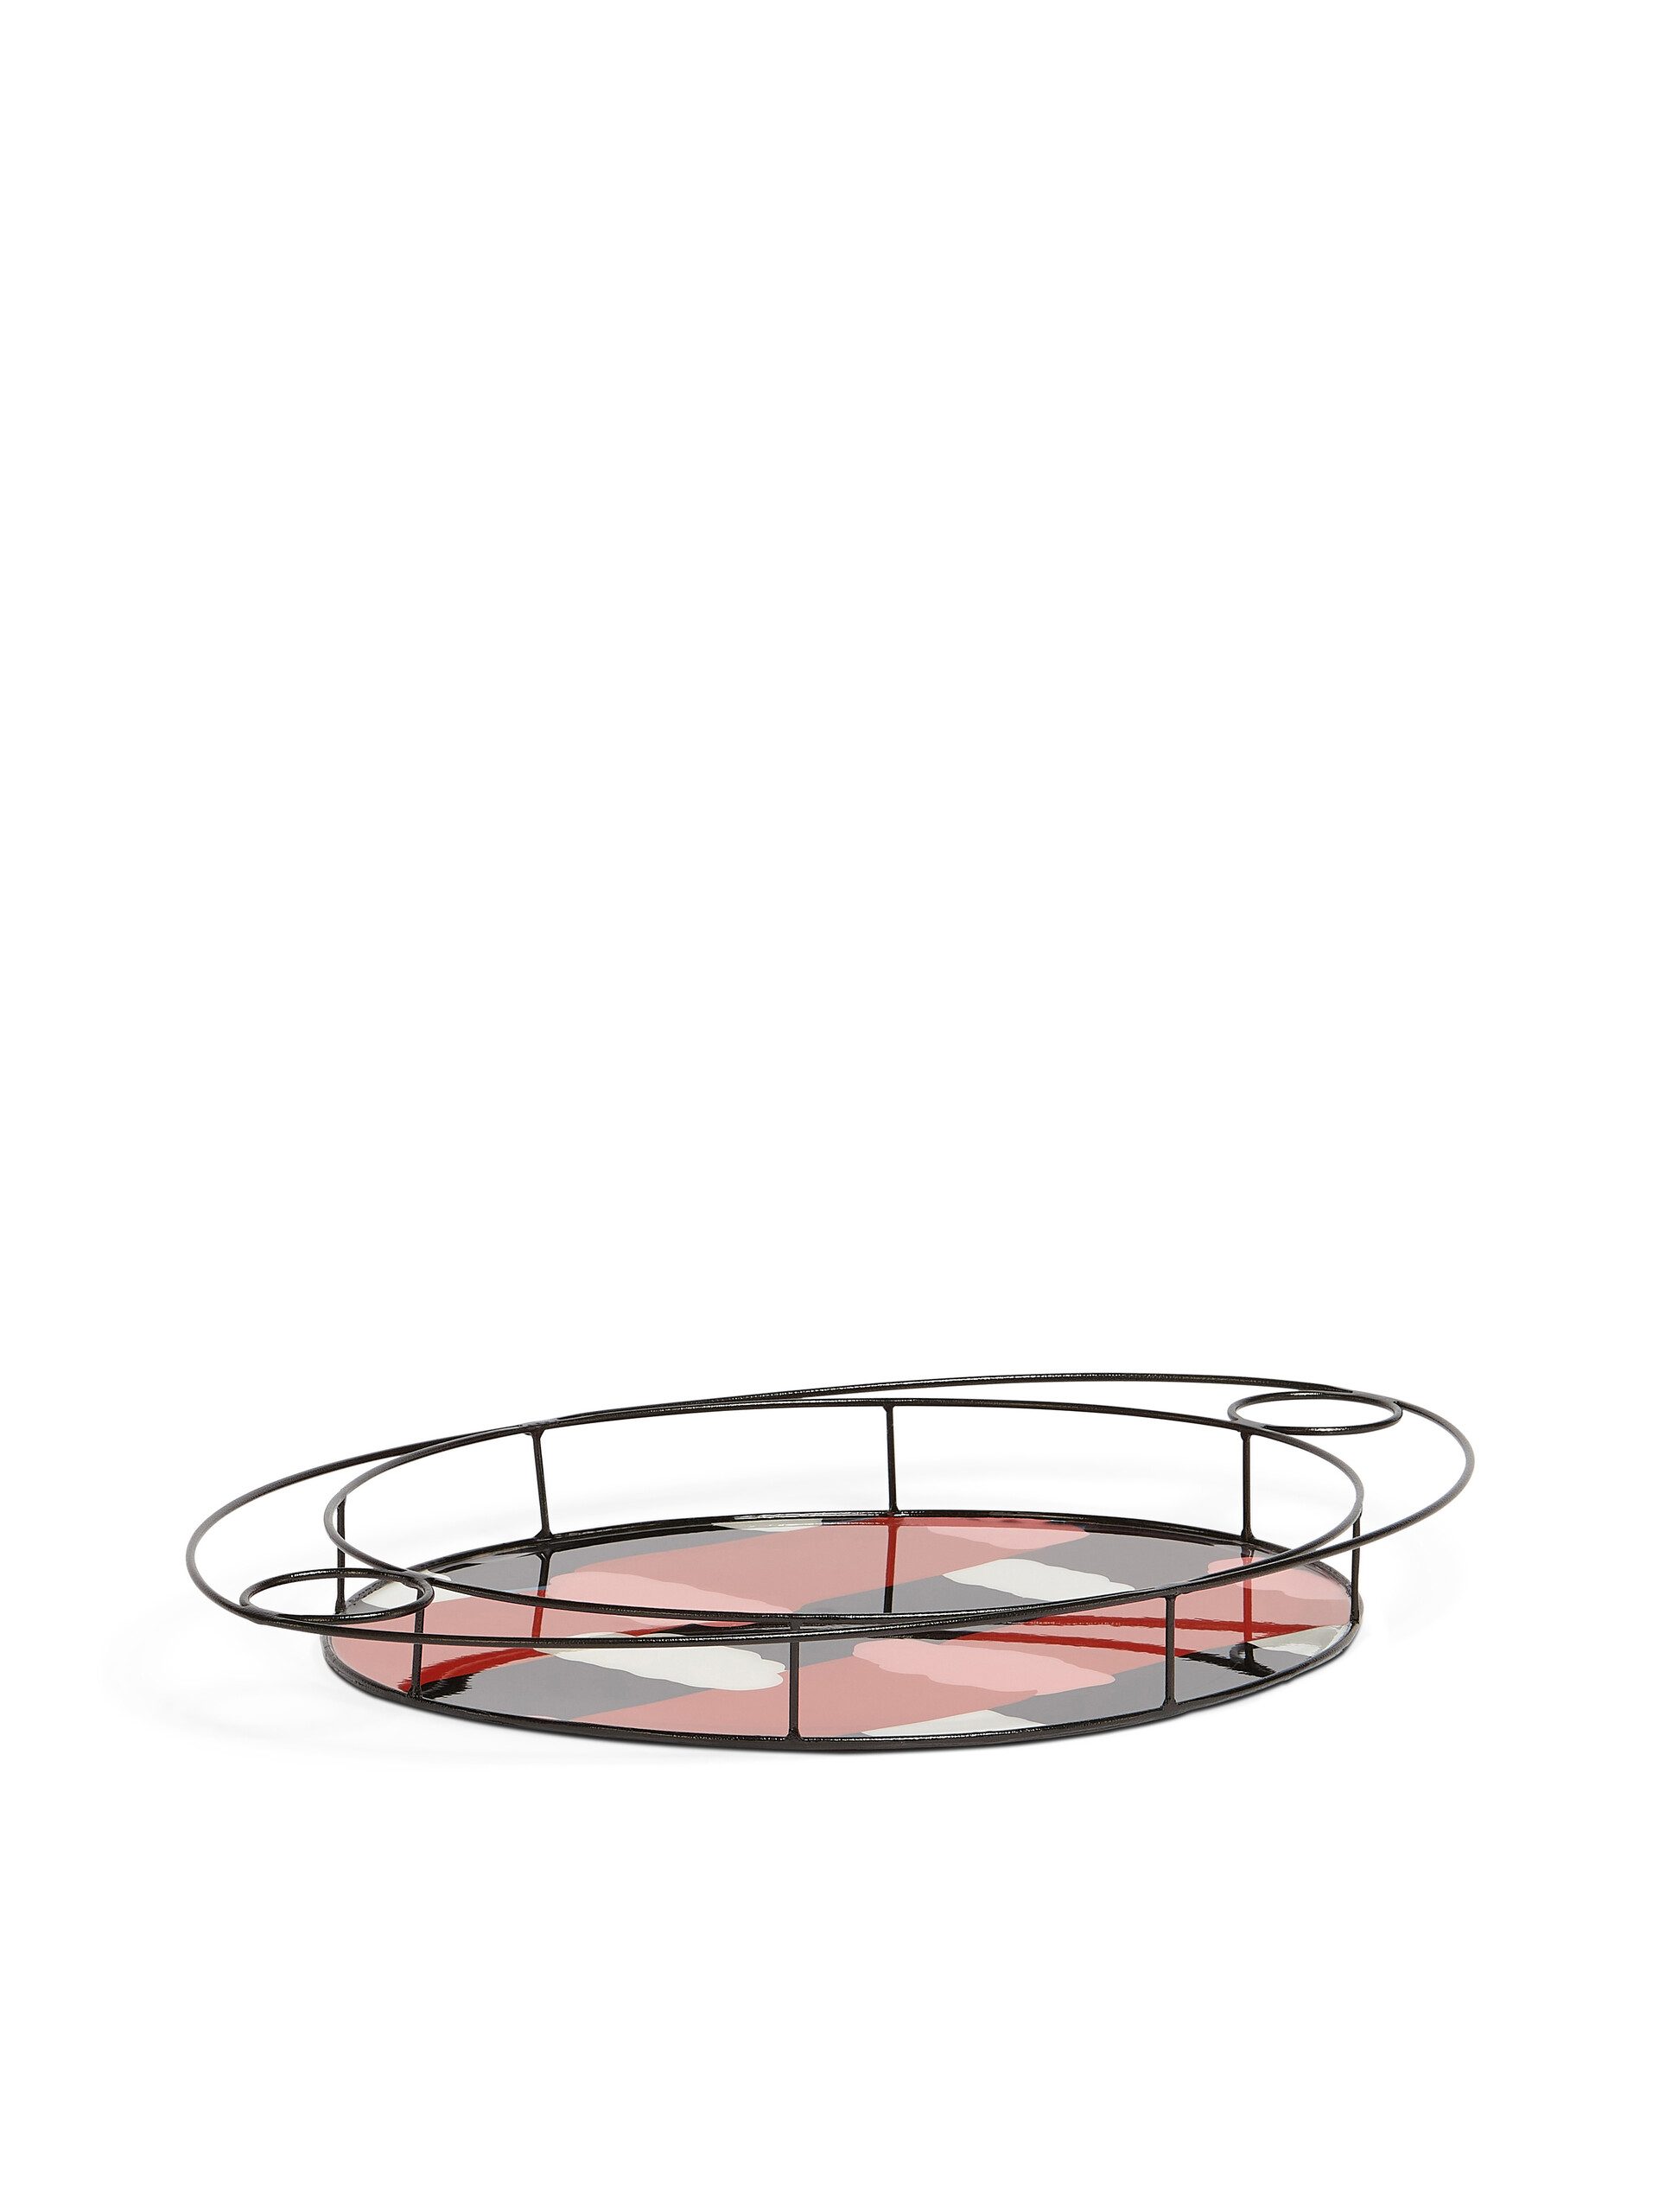 MARNI MARKET oval tray in iron colourblock resin - Accessories - Image 2